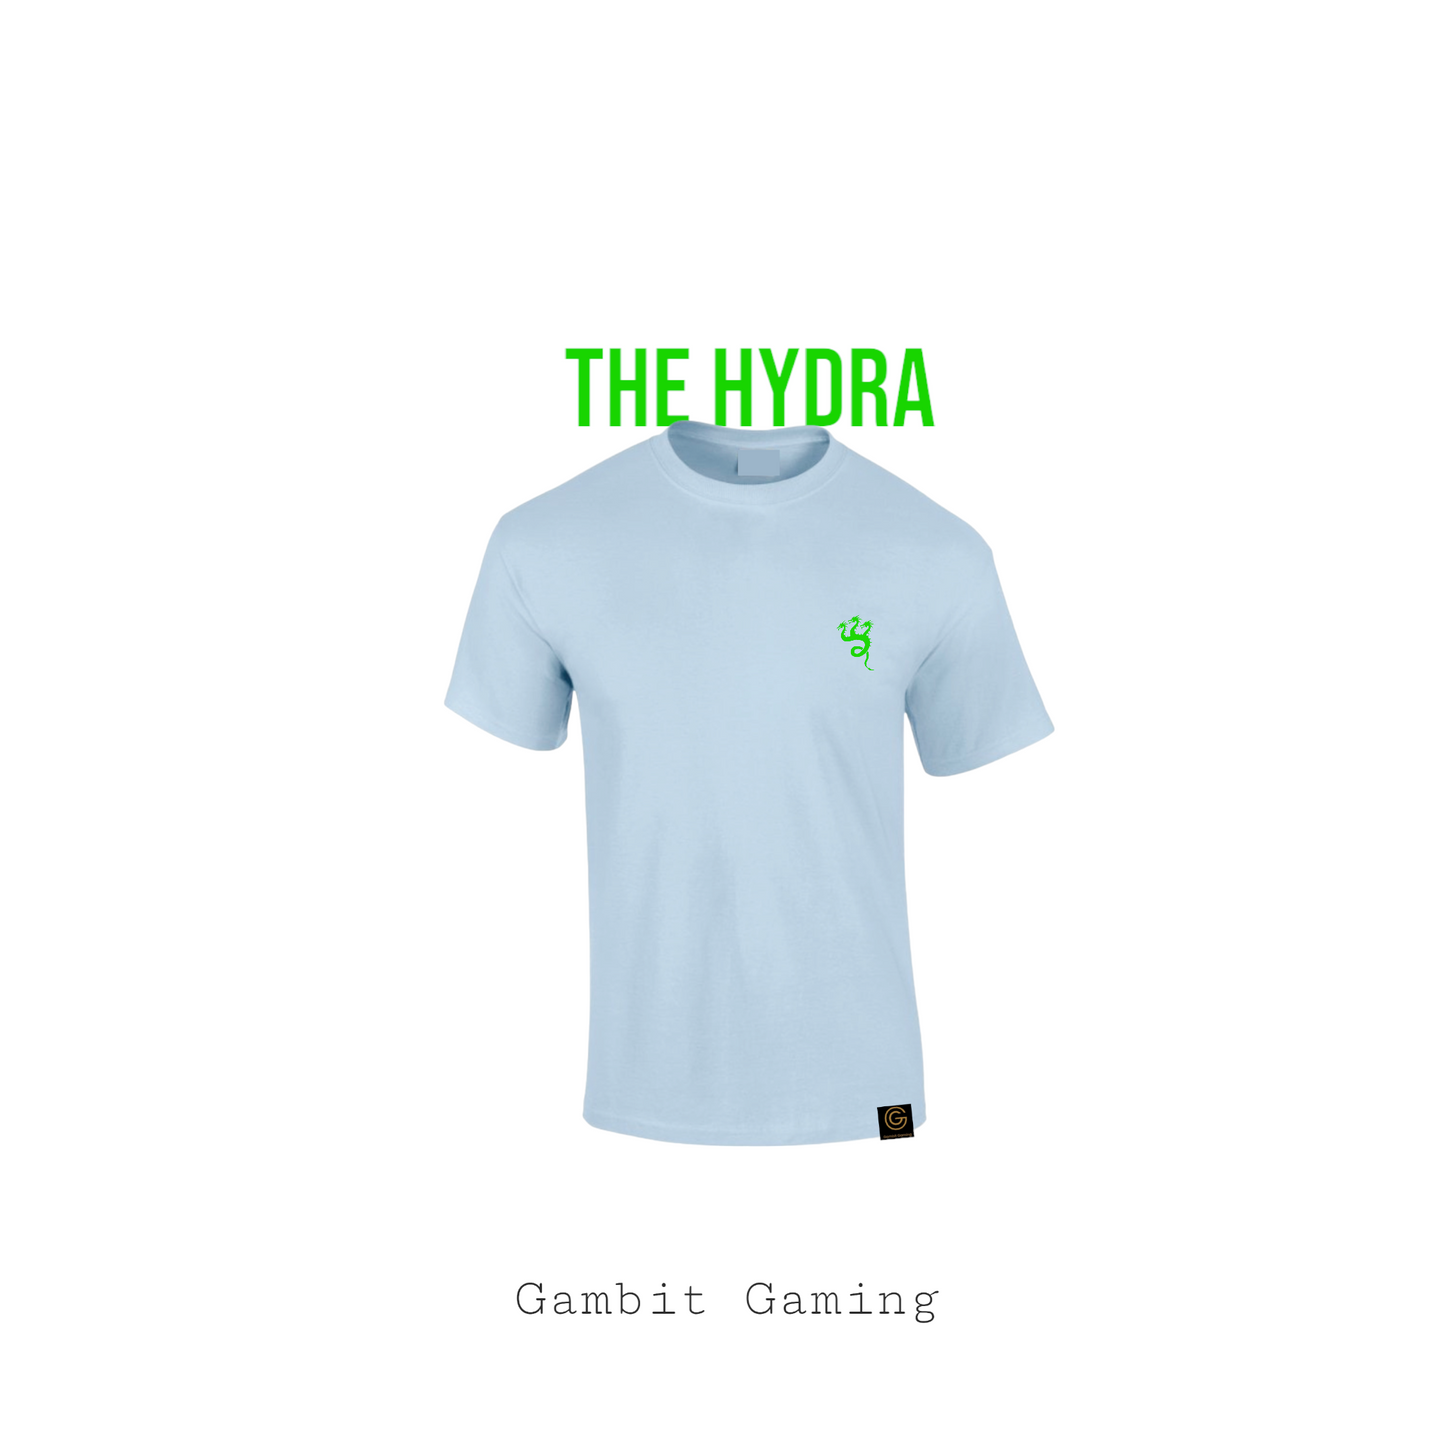 The Hydra